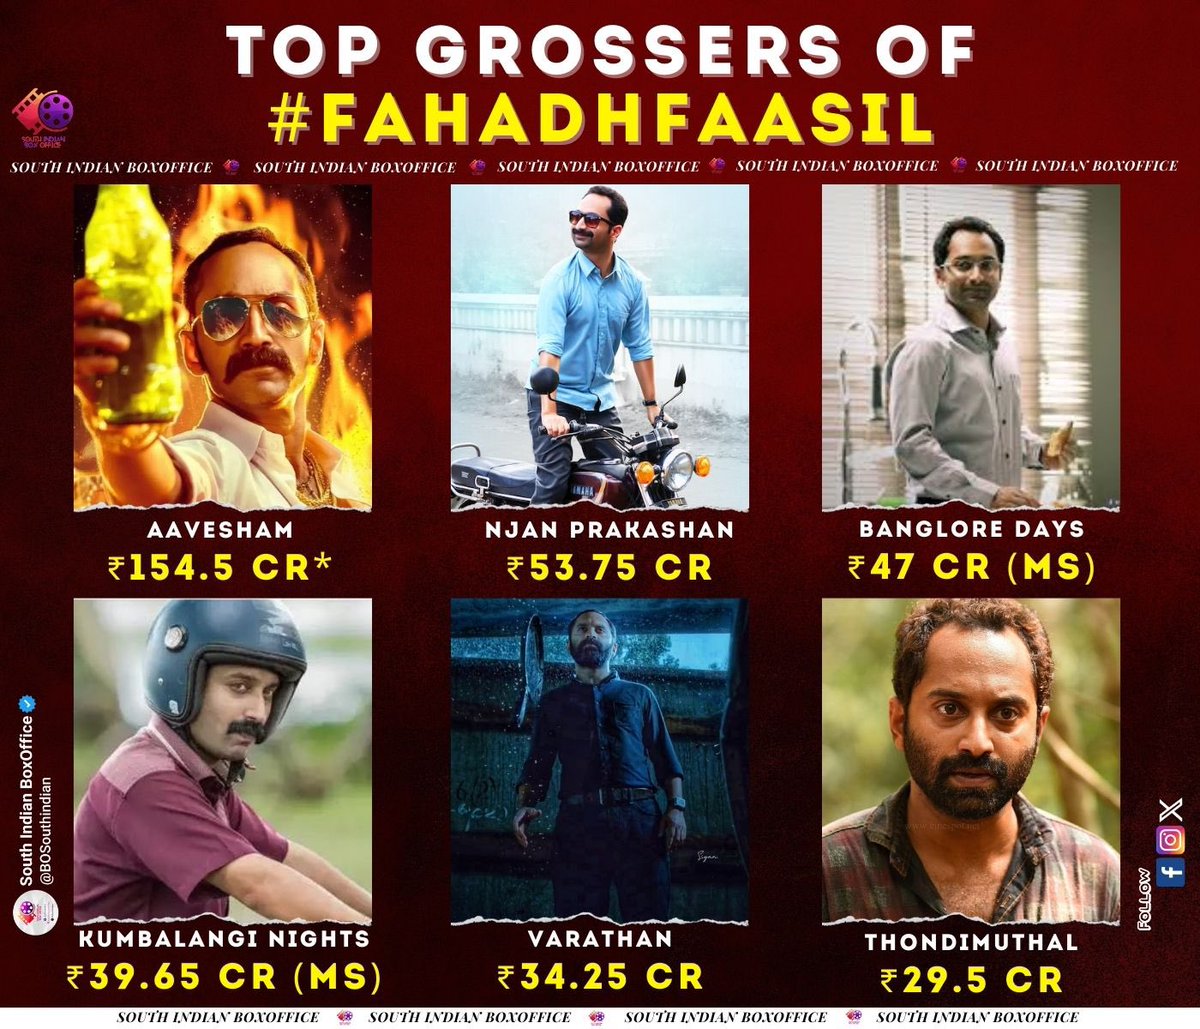 Top Worldwide Grossers of #FahadhFaasil - Malayalam Movies 

1 #Aavesham - ₹154.5 CR*
2 #NjanPrakashan - ₹53.75 CR
3 #Bangloredays - ₹47 CR (MS)
4 #Kumbalanginights - ₹39.65 CR (MS)
5 #Varathan - ₹34.25 CR
6 #Thondimuthal - ₹29.5 CR

*MS - MultiStar